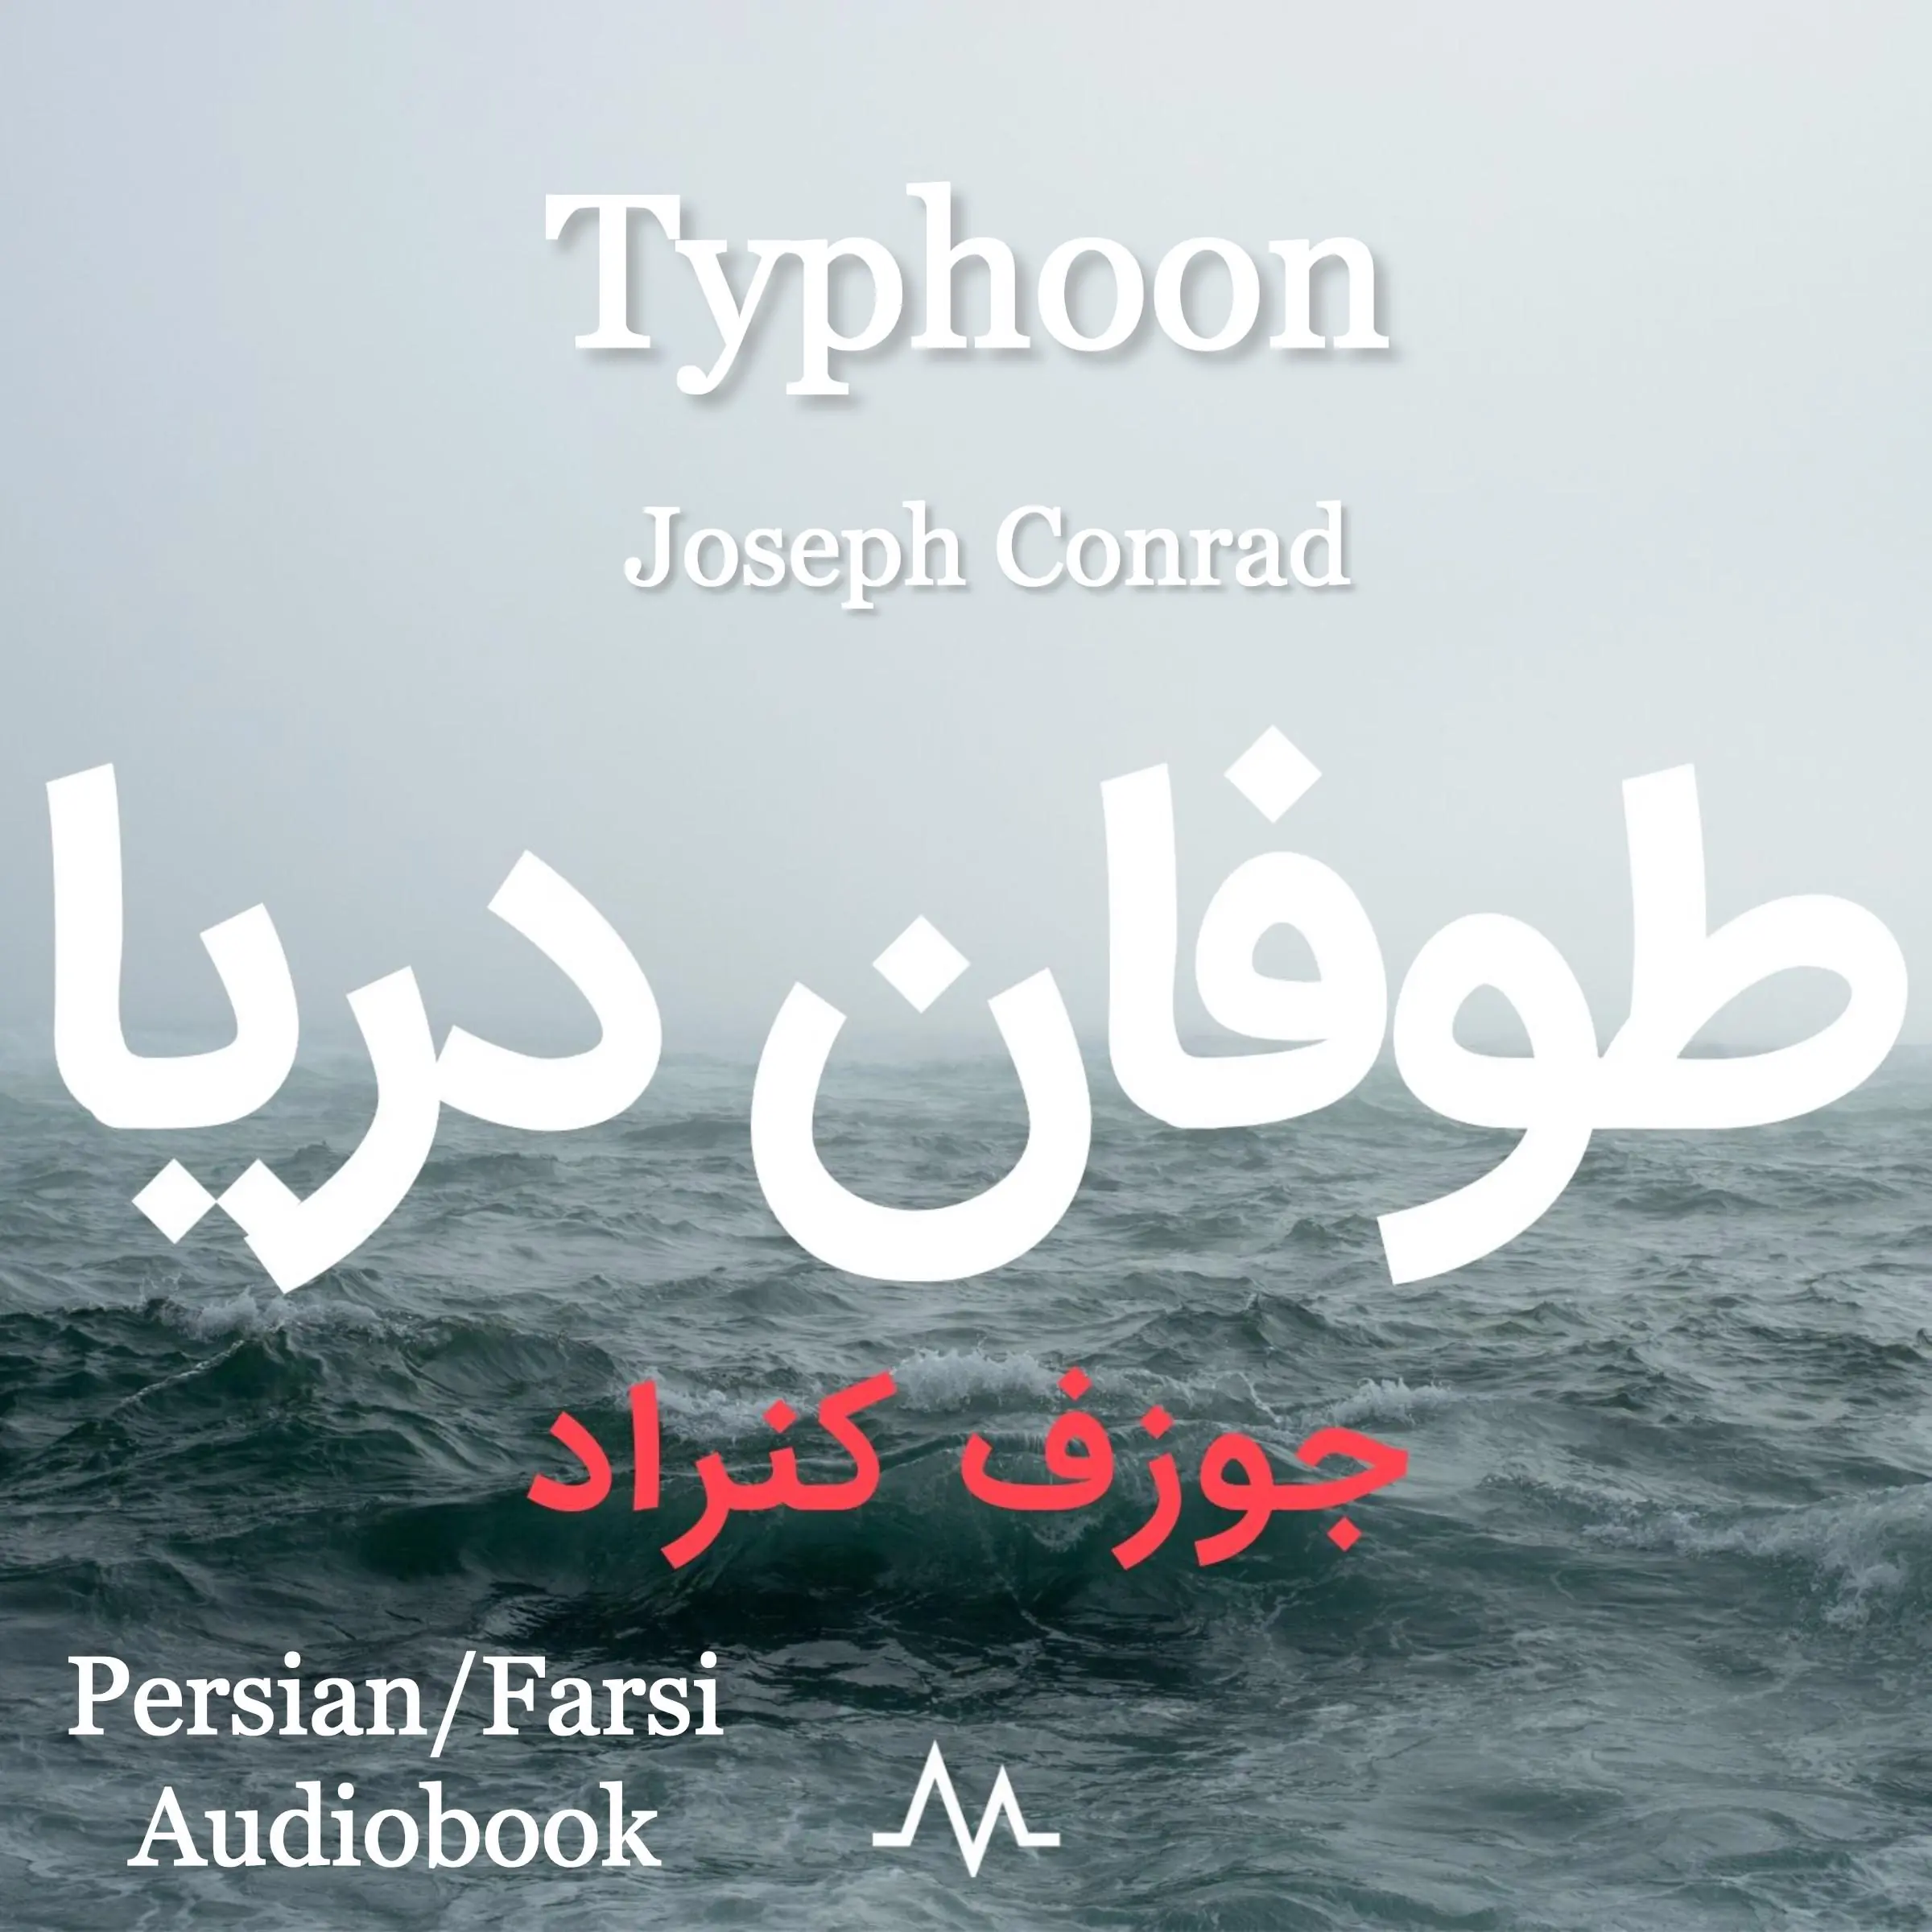 Typhoon by Joseph Conrad Audiobook